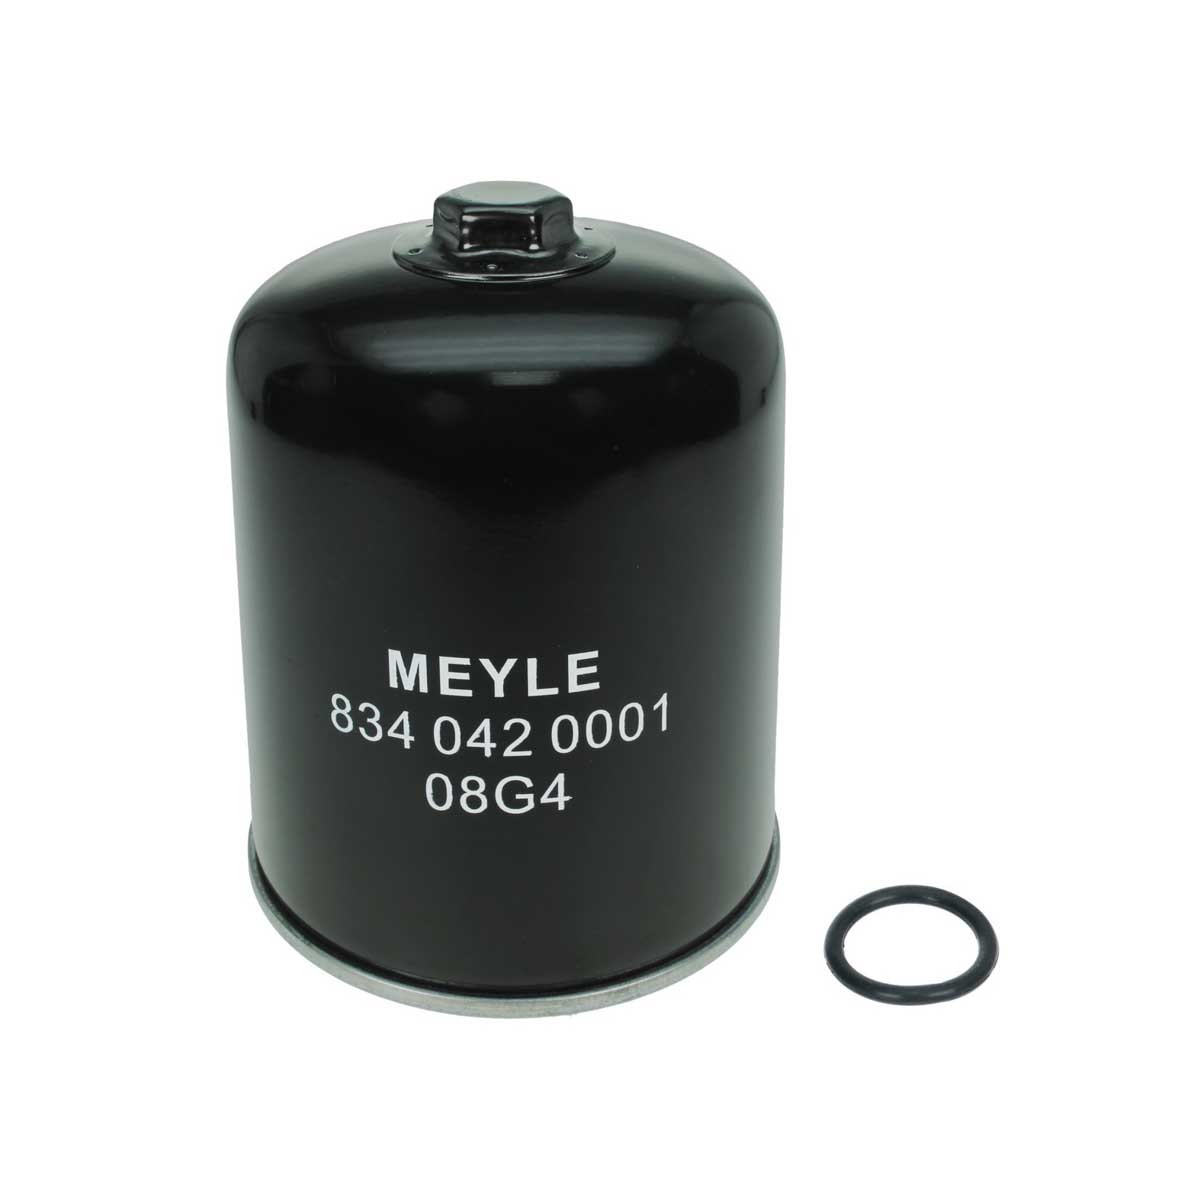 MBX0213 MEYLE 8340420001 Air Dryer, compressed-air system 5021 170 077